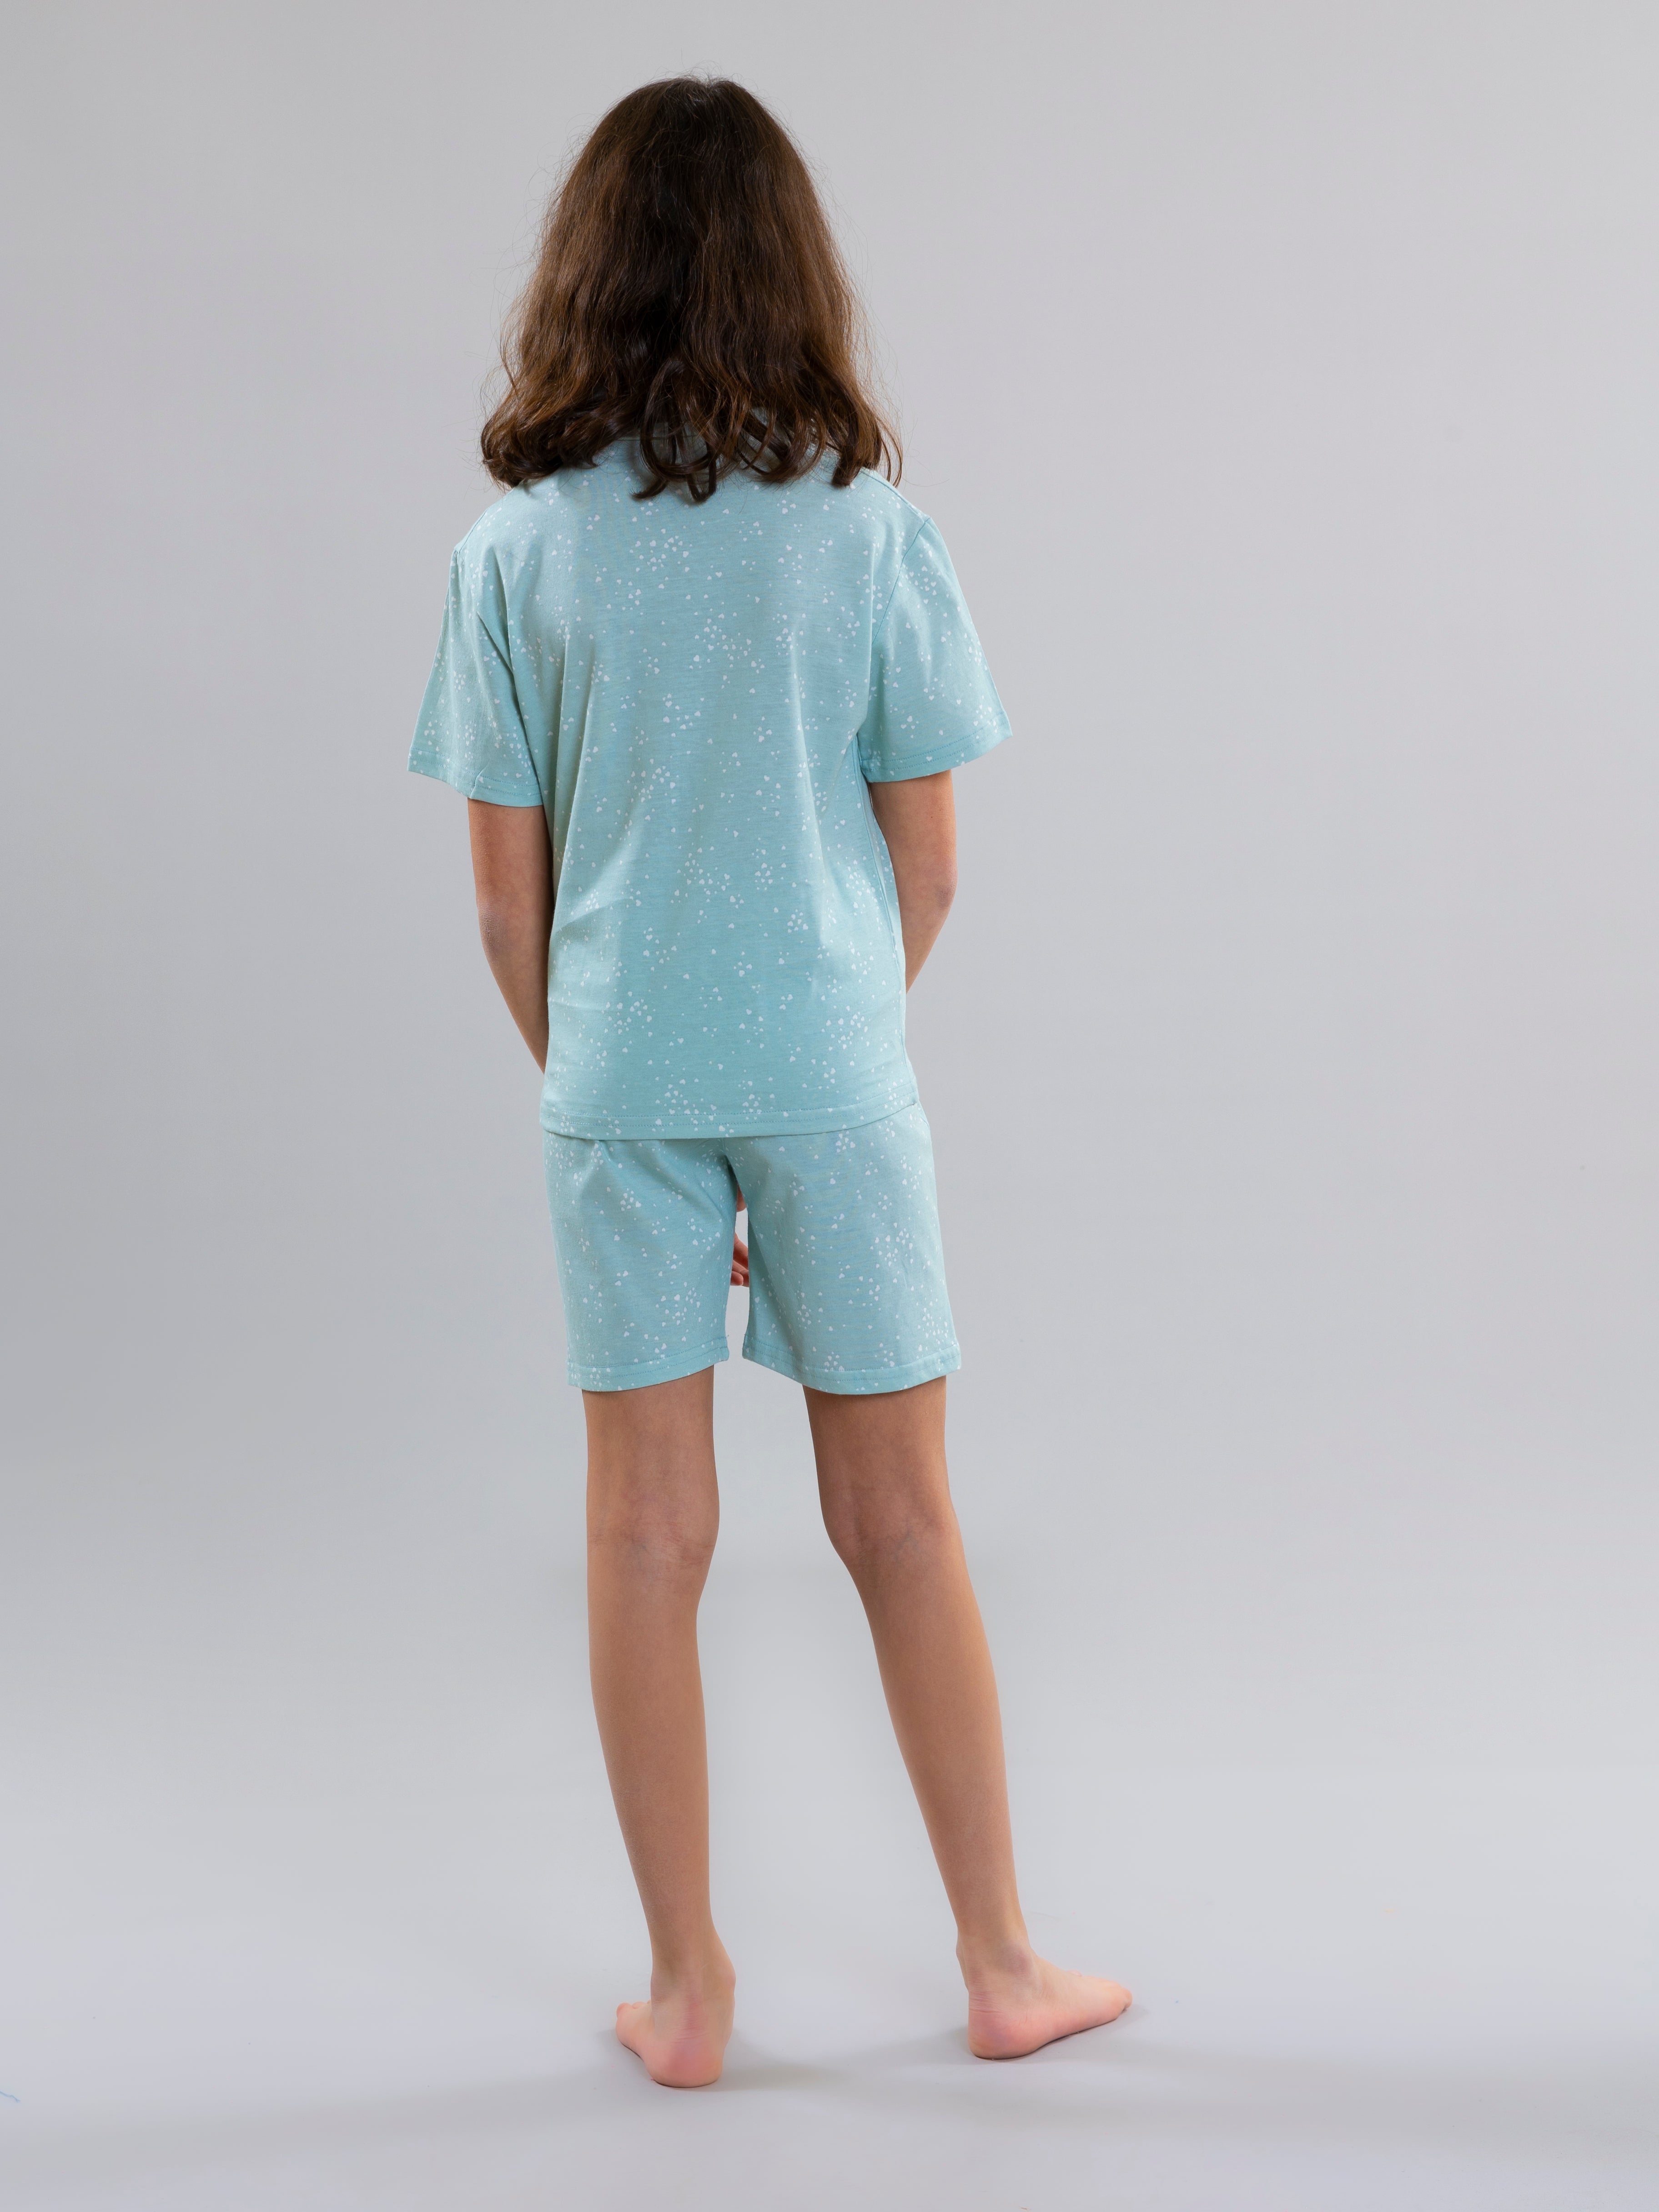 Mini Heart Design Pyjama Set For Girls - Aqua